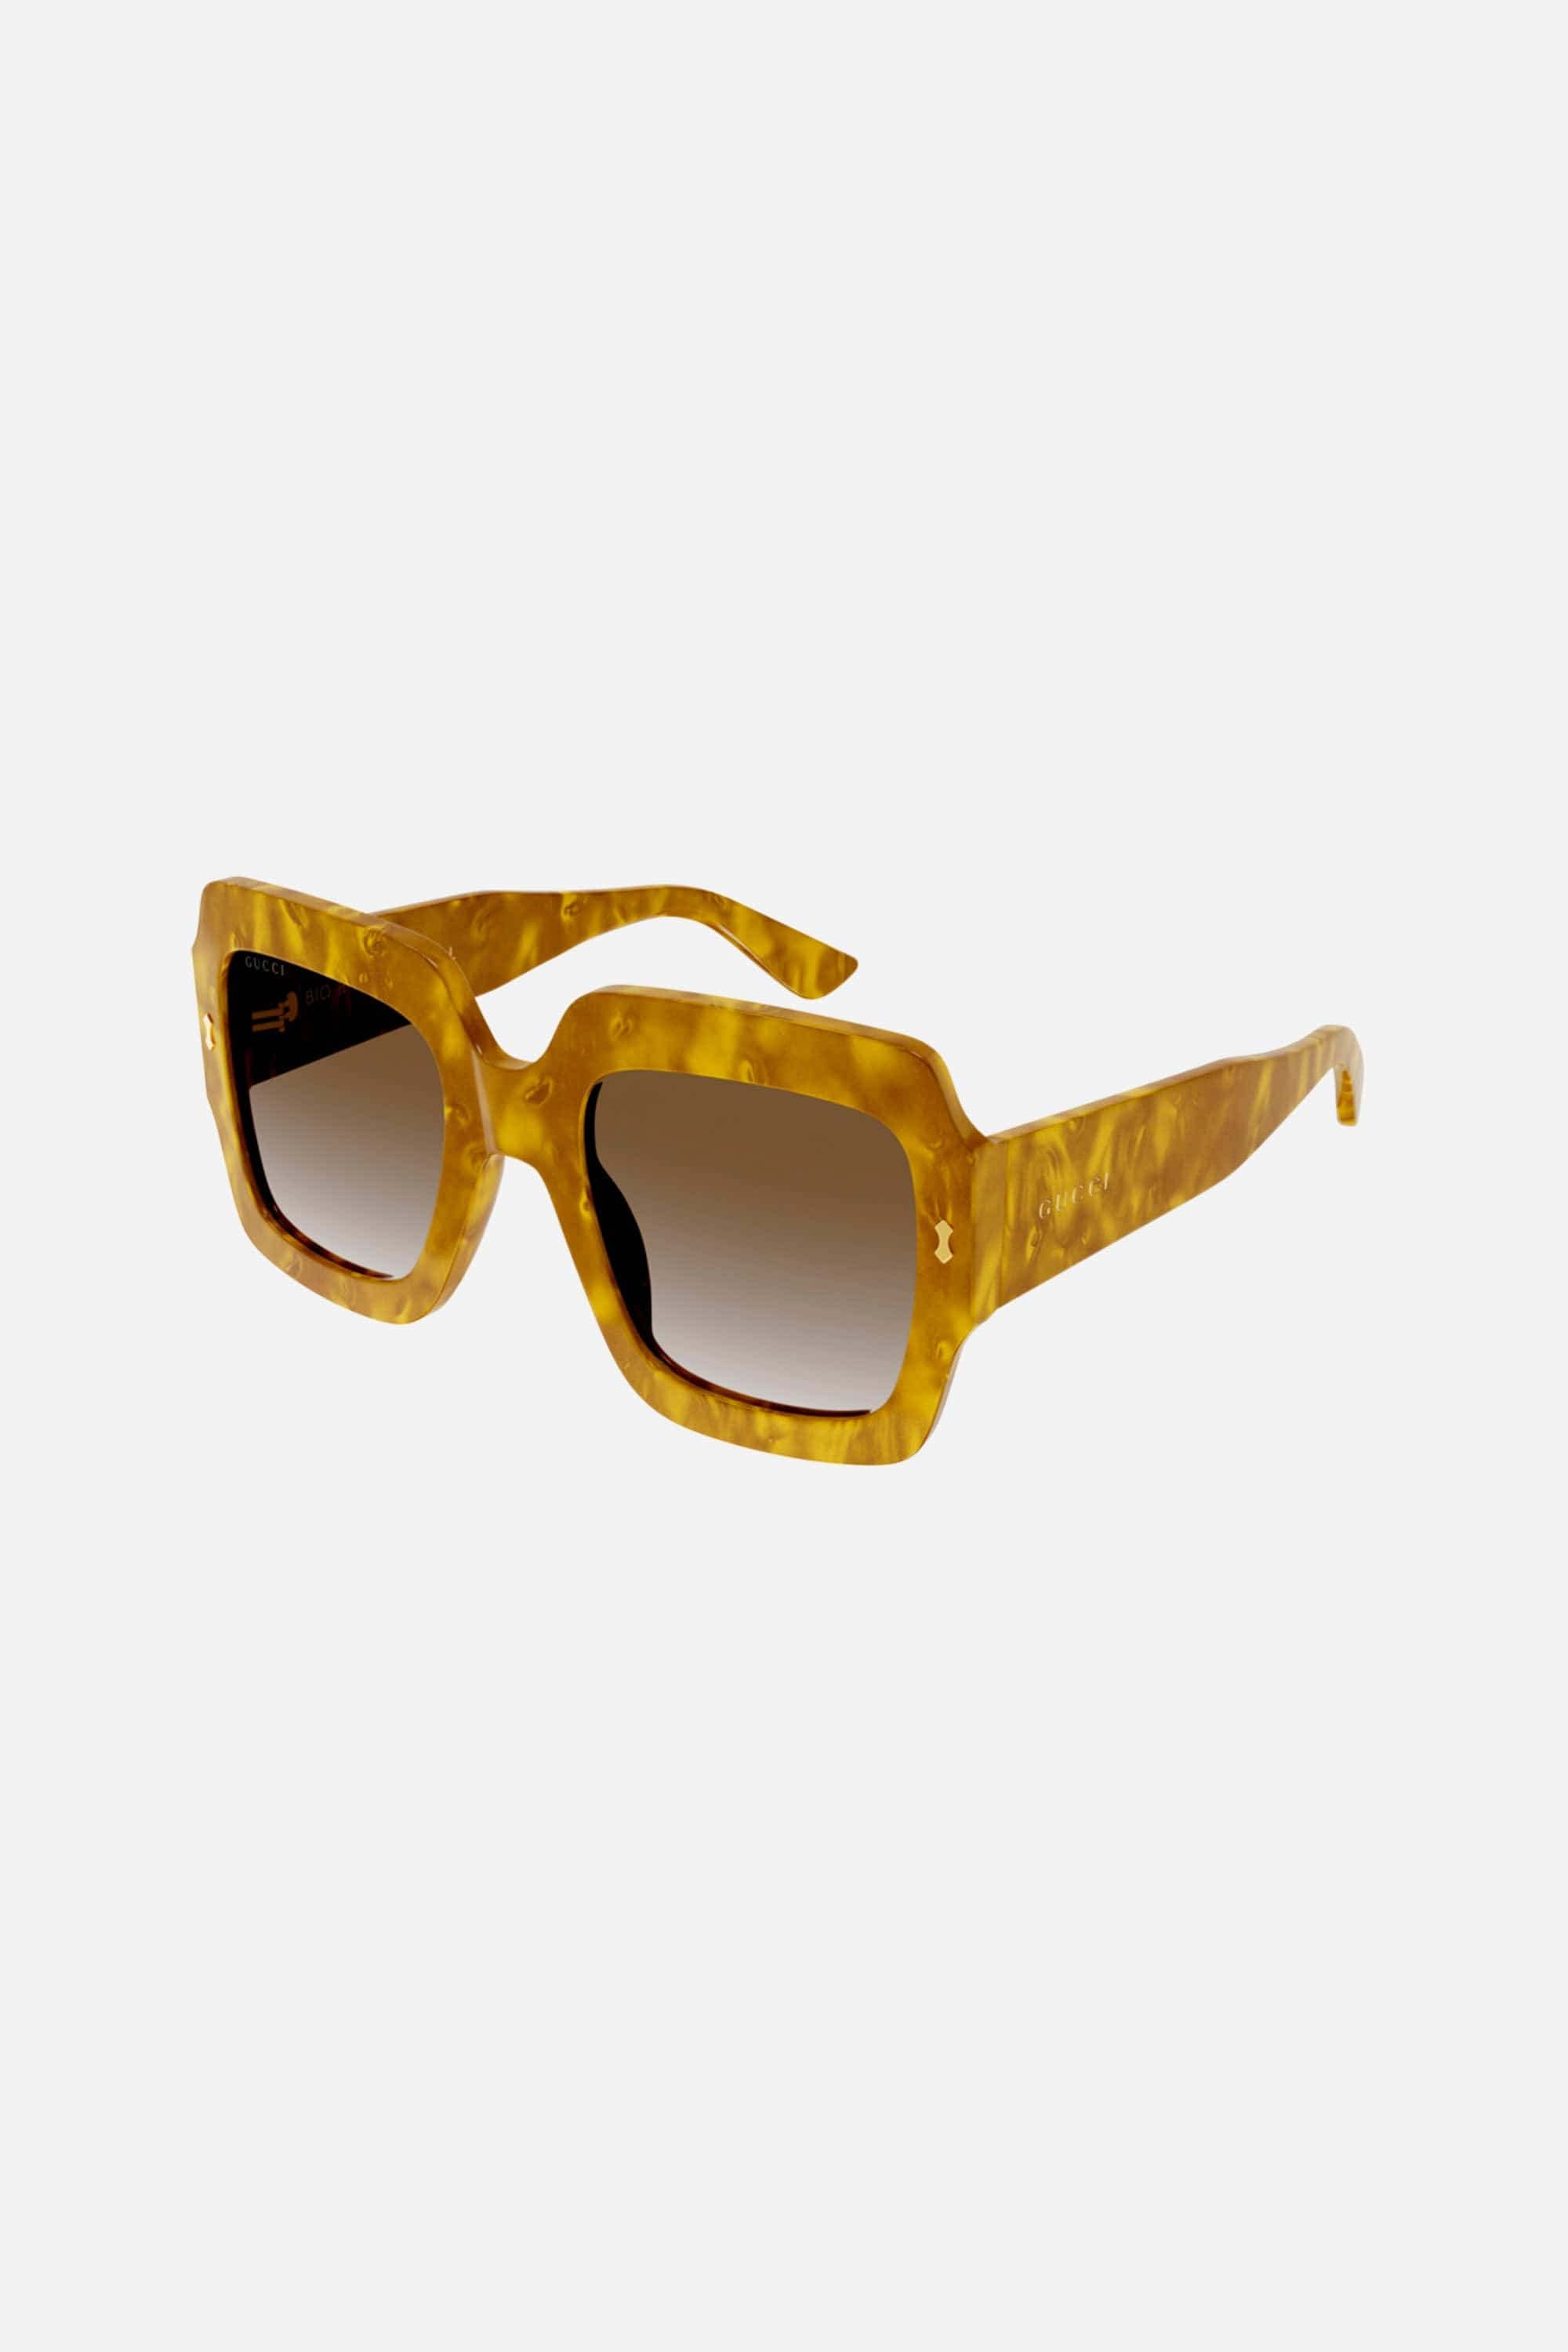 Gucci oversized squared sustainable yellow sunglasses - Eyewear Club